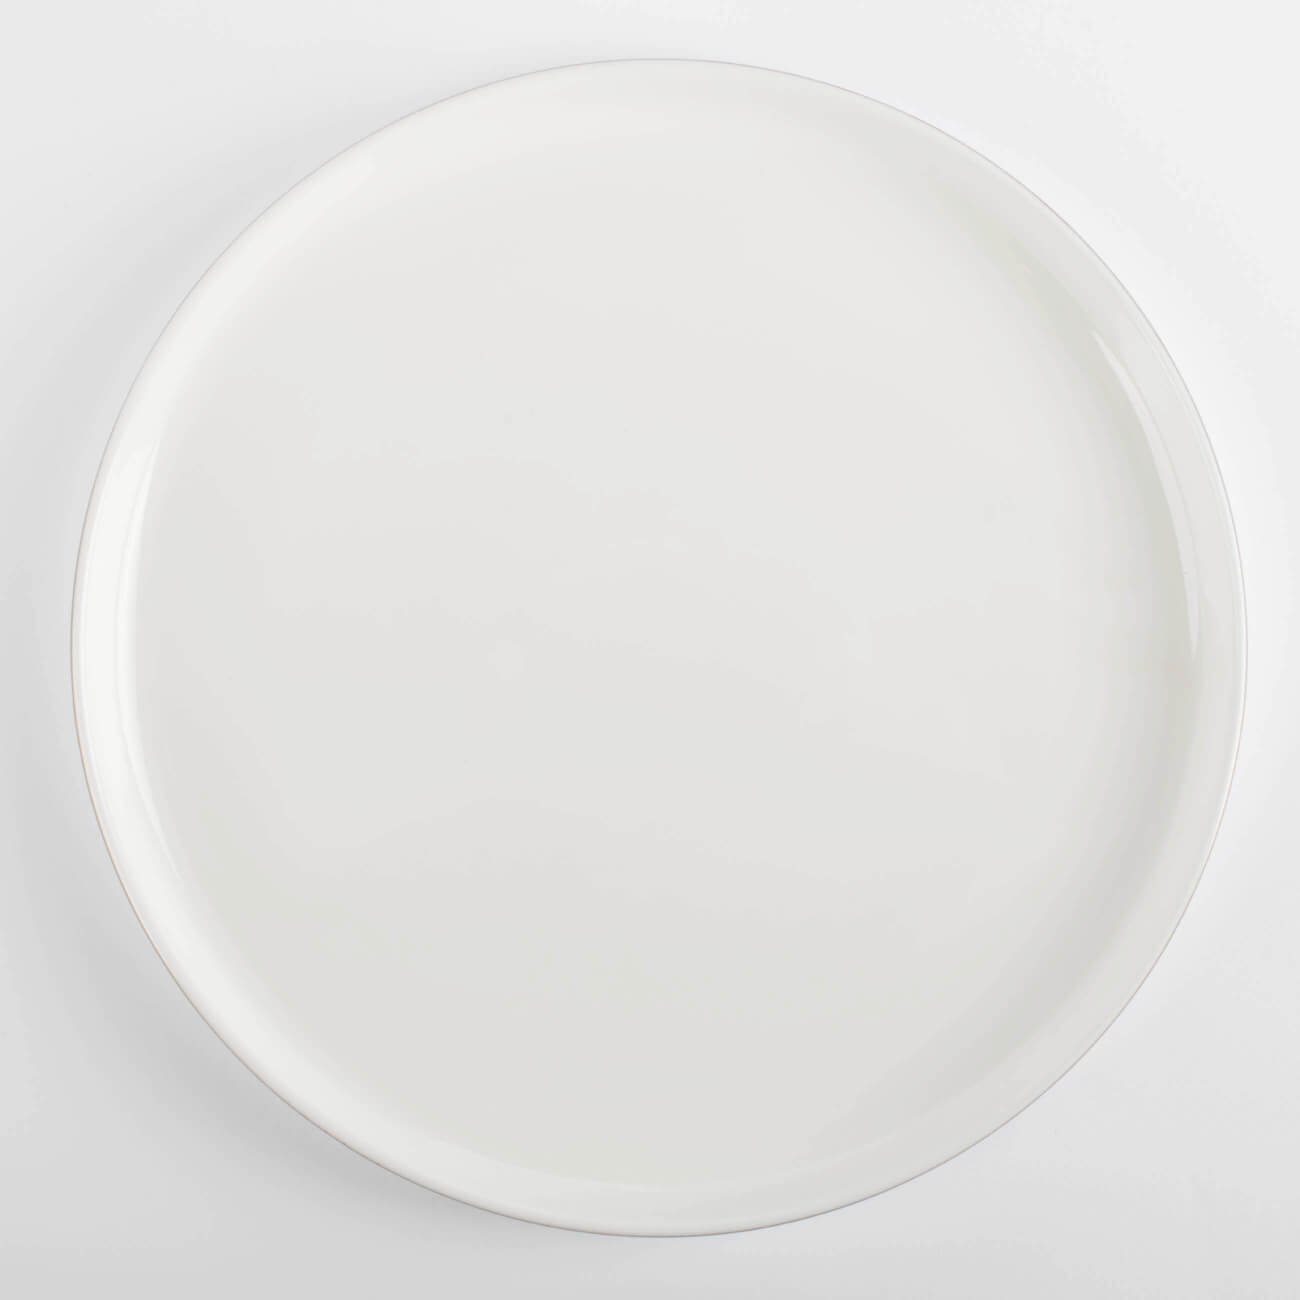 Тарелка обеденная, 26 см, фарфор F, белая, Ideal gold тарелка обеденная фарфор 25 см круглая frozen pattern fioretta tdp590